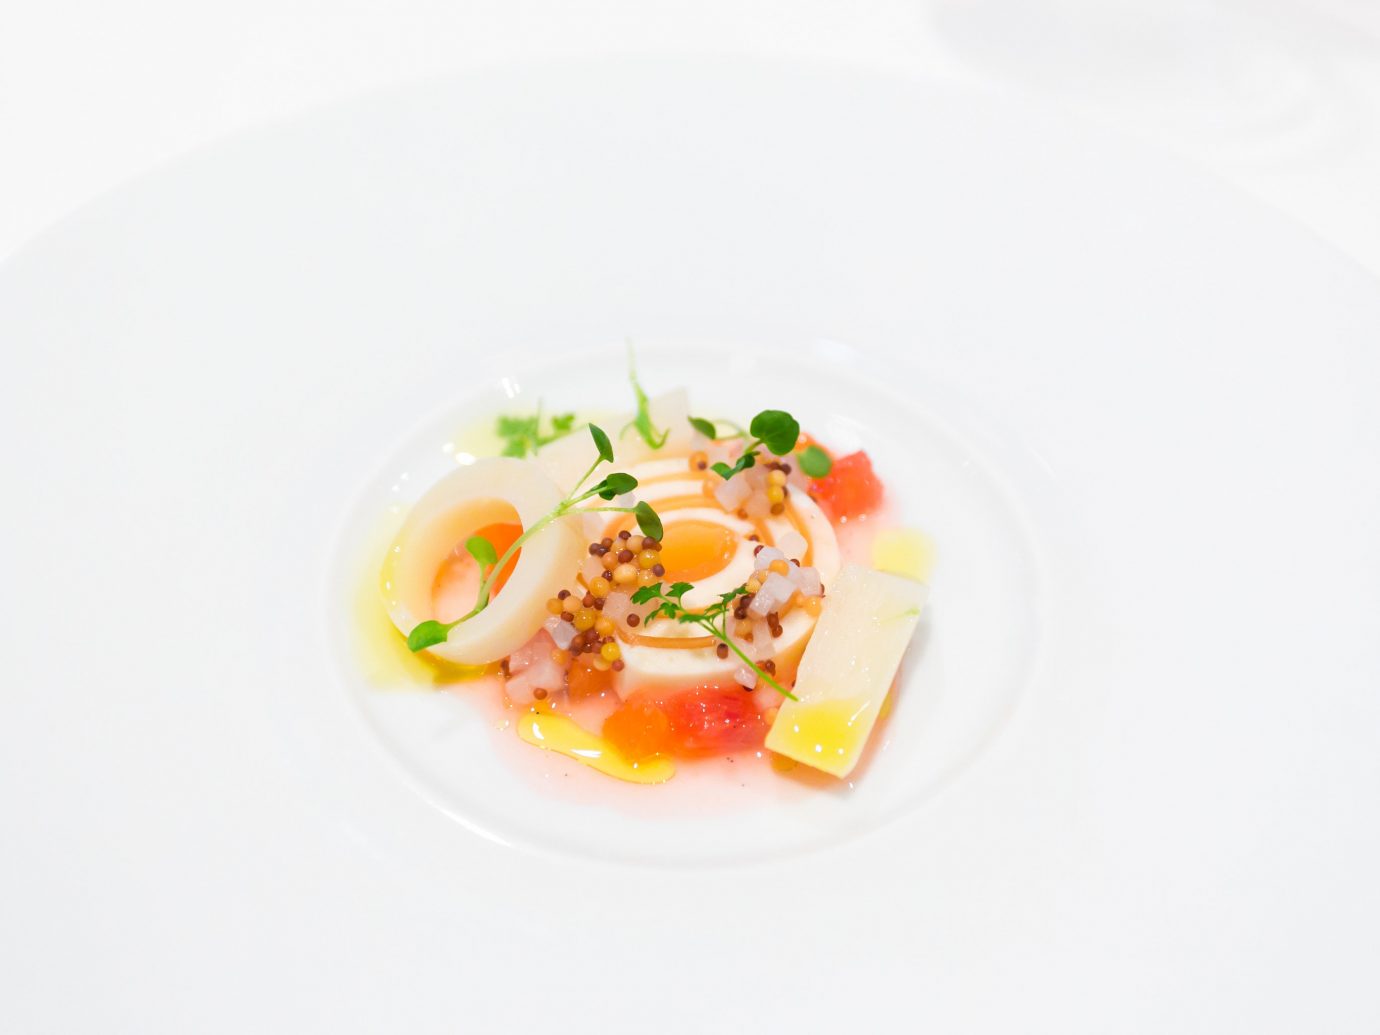 Hotels Romance Spa Retreats Trip Ideas plate food dish cuisine meal fish produce white vegetable breakfast soup piece de resistance